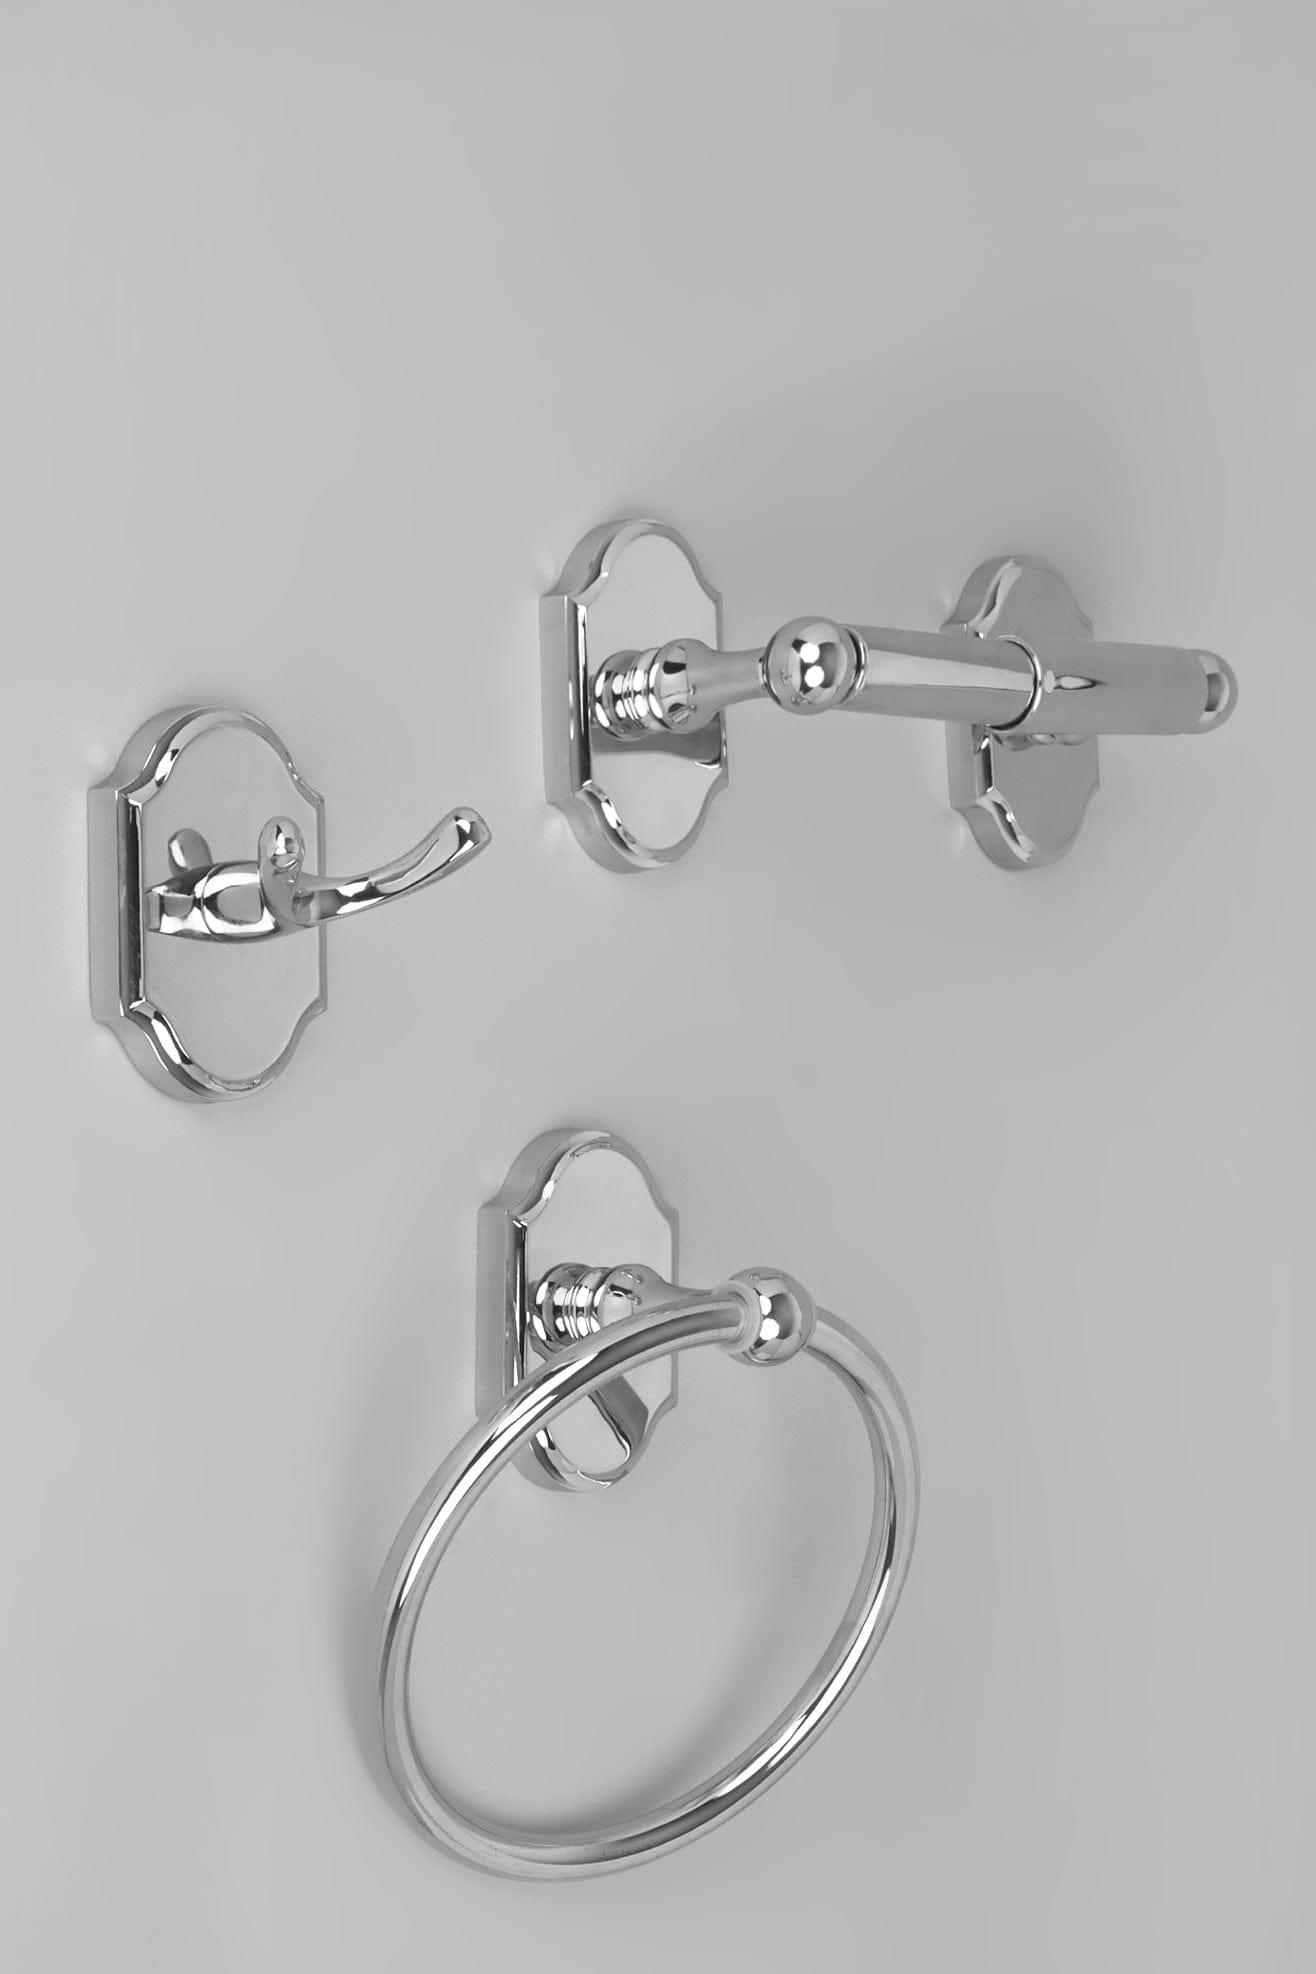 Gdecorstore Bathroom Chrome / 3-Piece Set Chrome Bathroom Accessories - Towel Ring Holder, Toilet Roll Holder, Towel Robe Hook